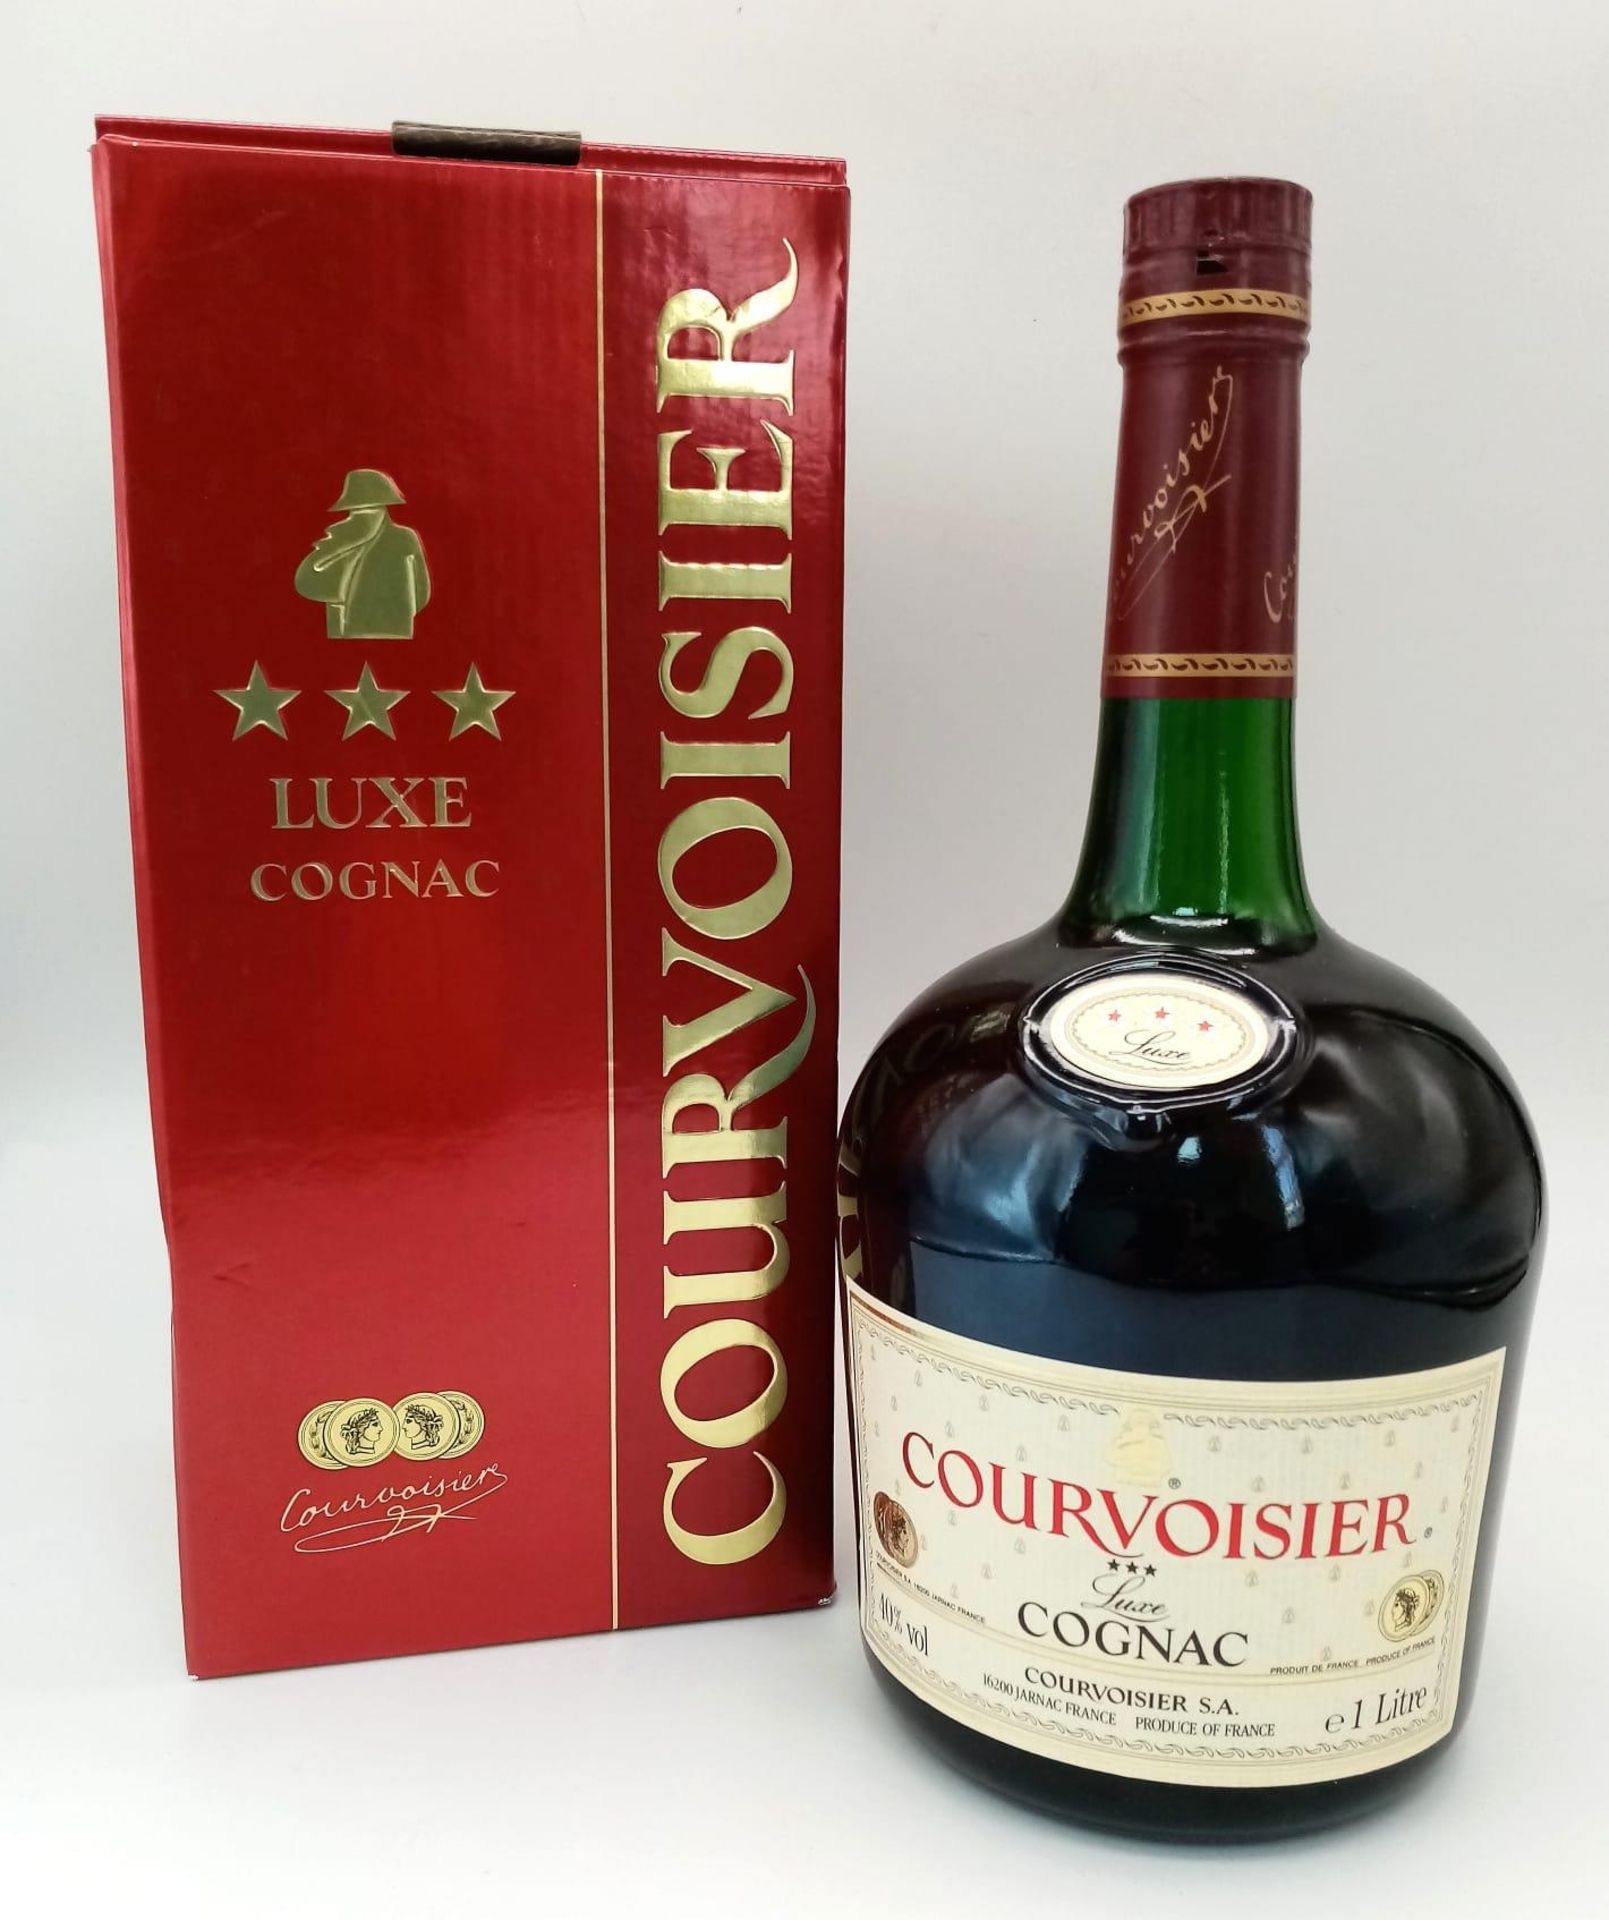 A 1 Litre Bottle of Courvosier Luxe Cognac. In original packaging.